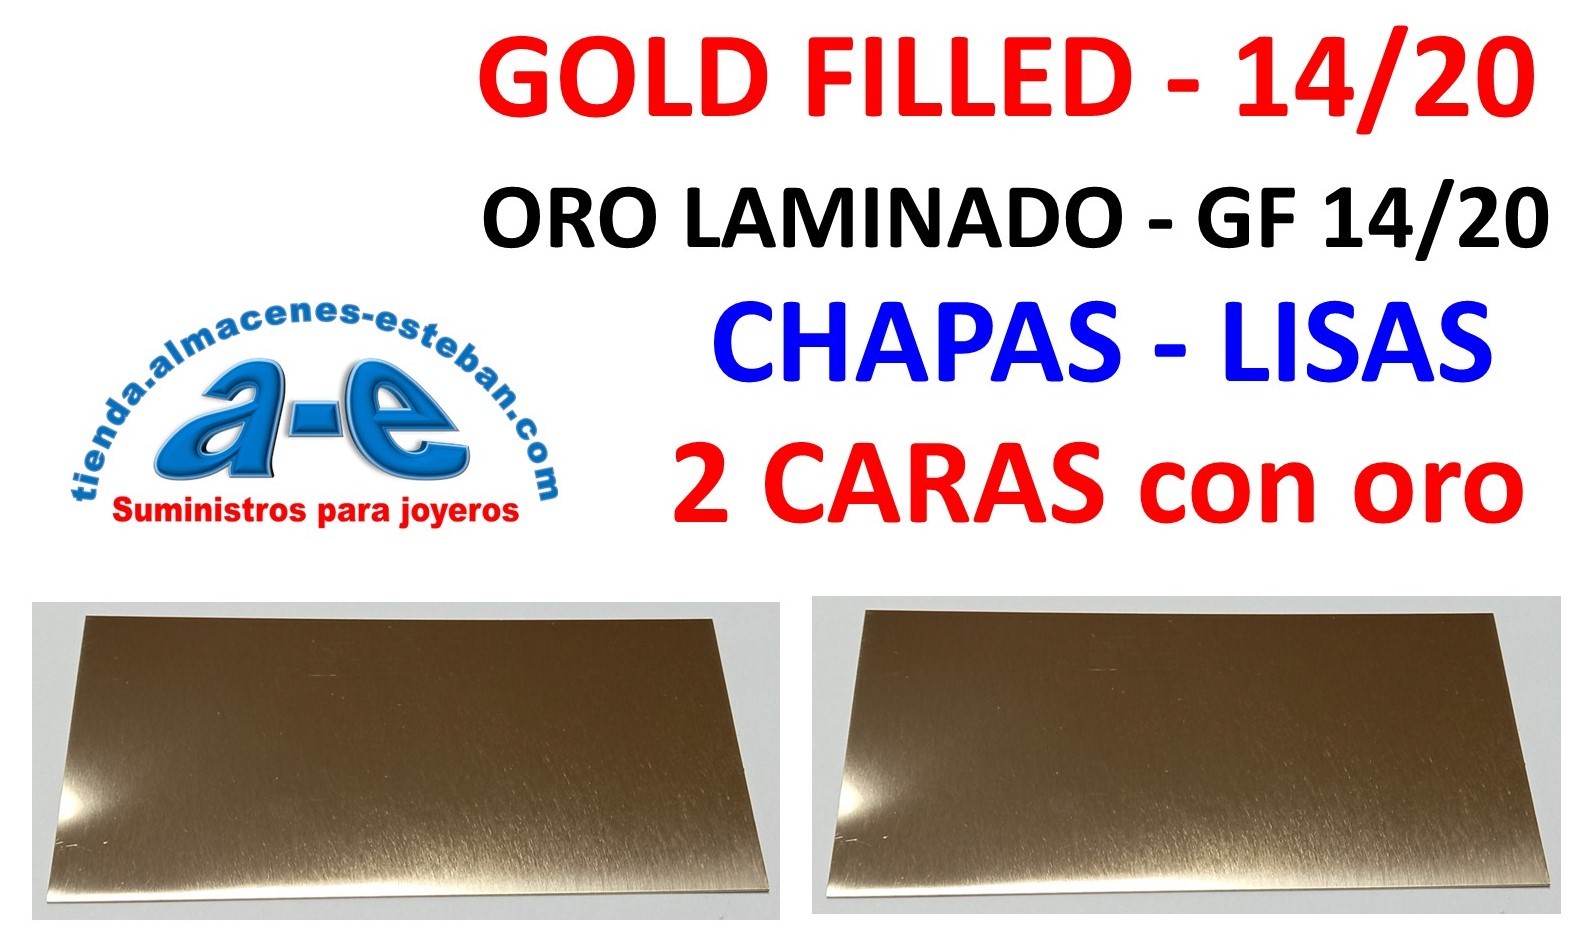 GOLD-FILLED-CHAPA-2-CARAS